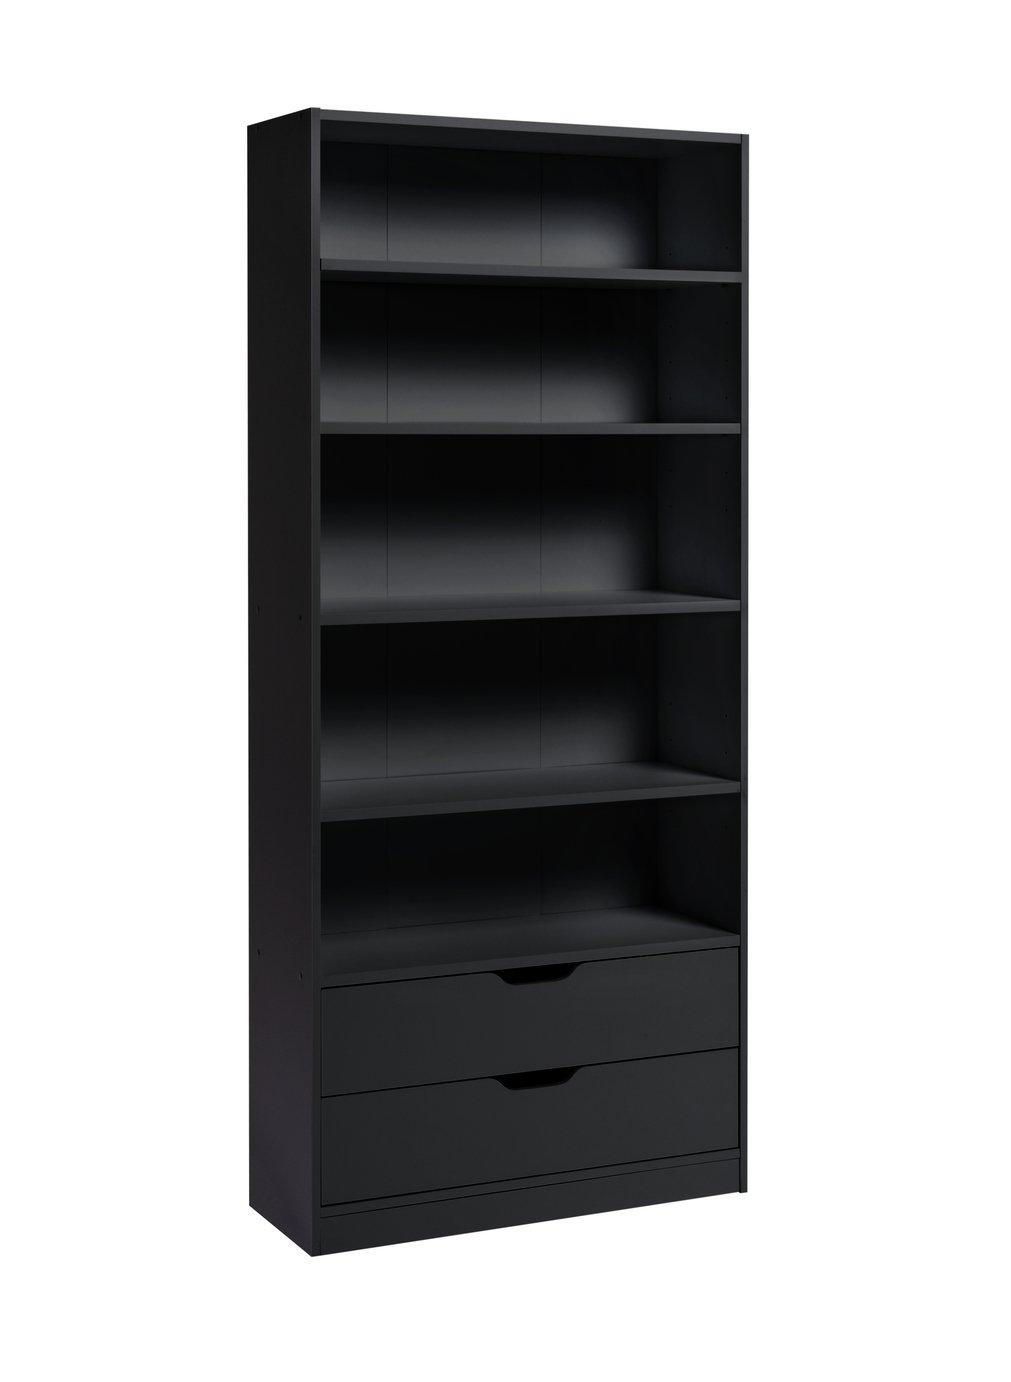 Habitat Compton 2 Drawer Bookcase - Black